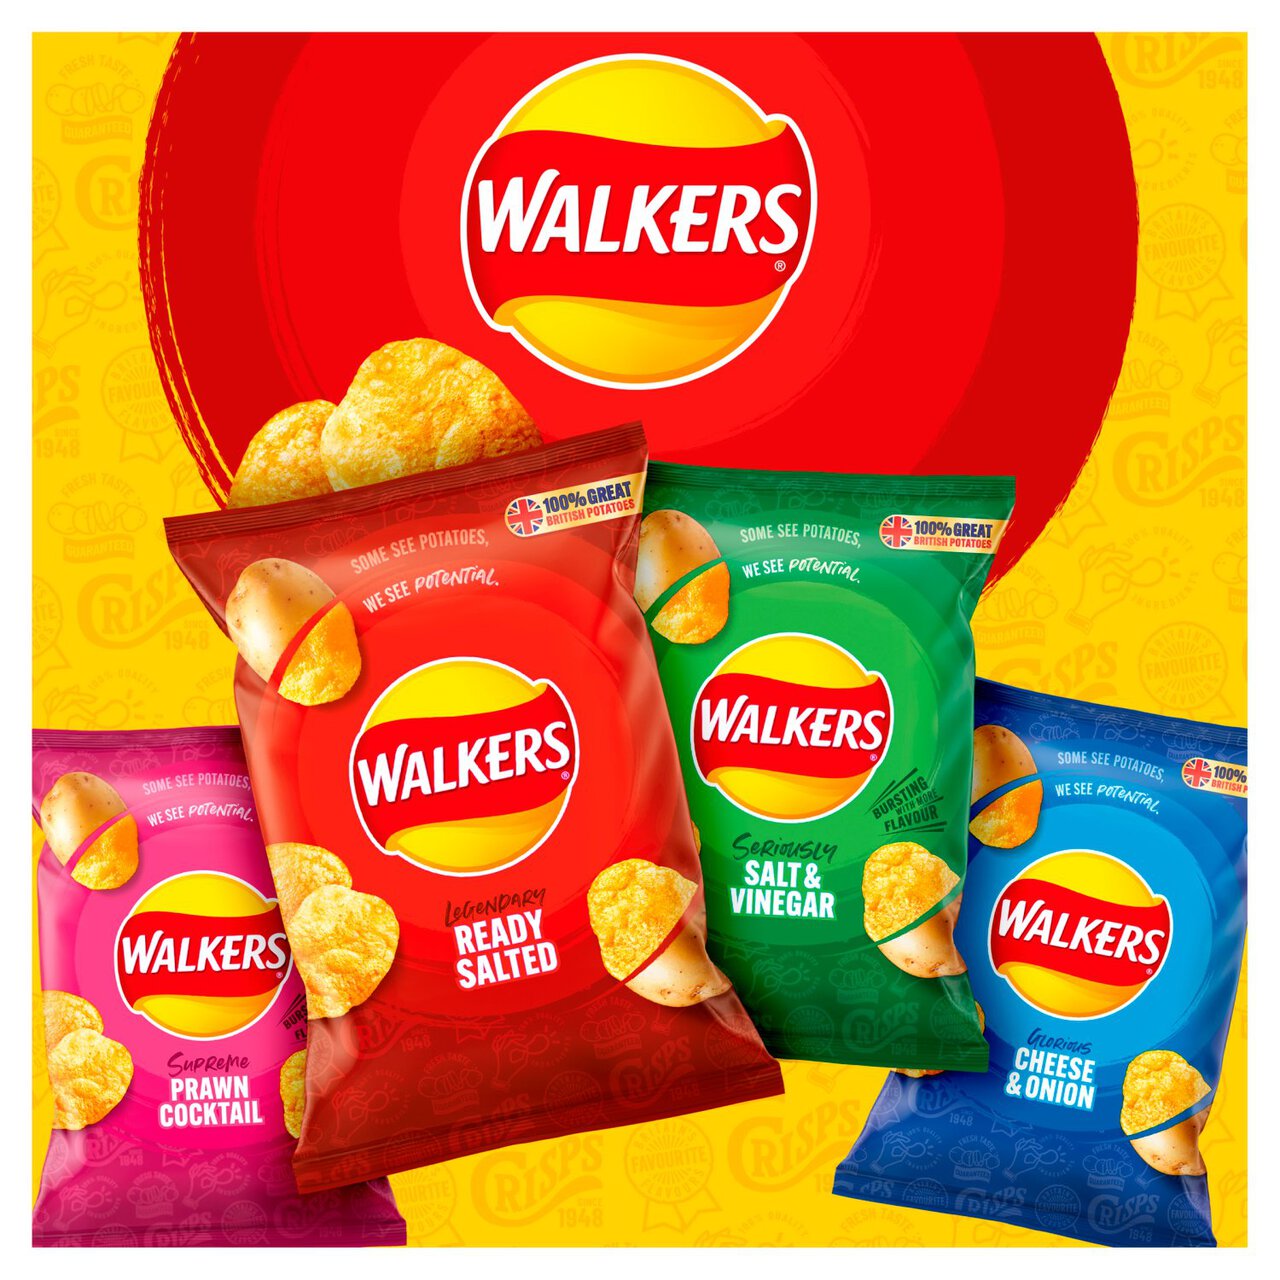 Walkers Classic Variety Multipack Crisps 12 per pack